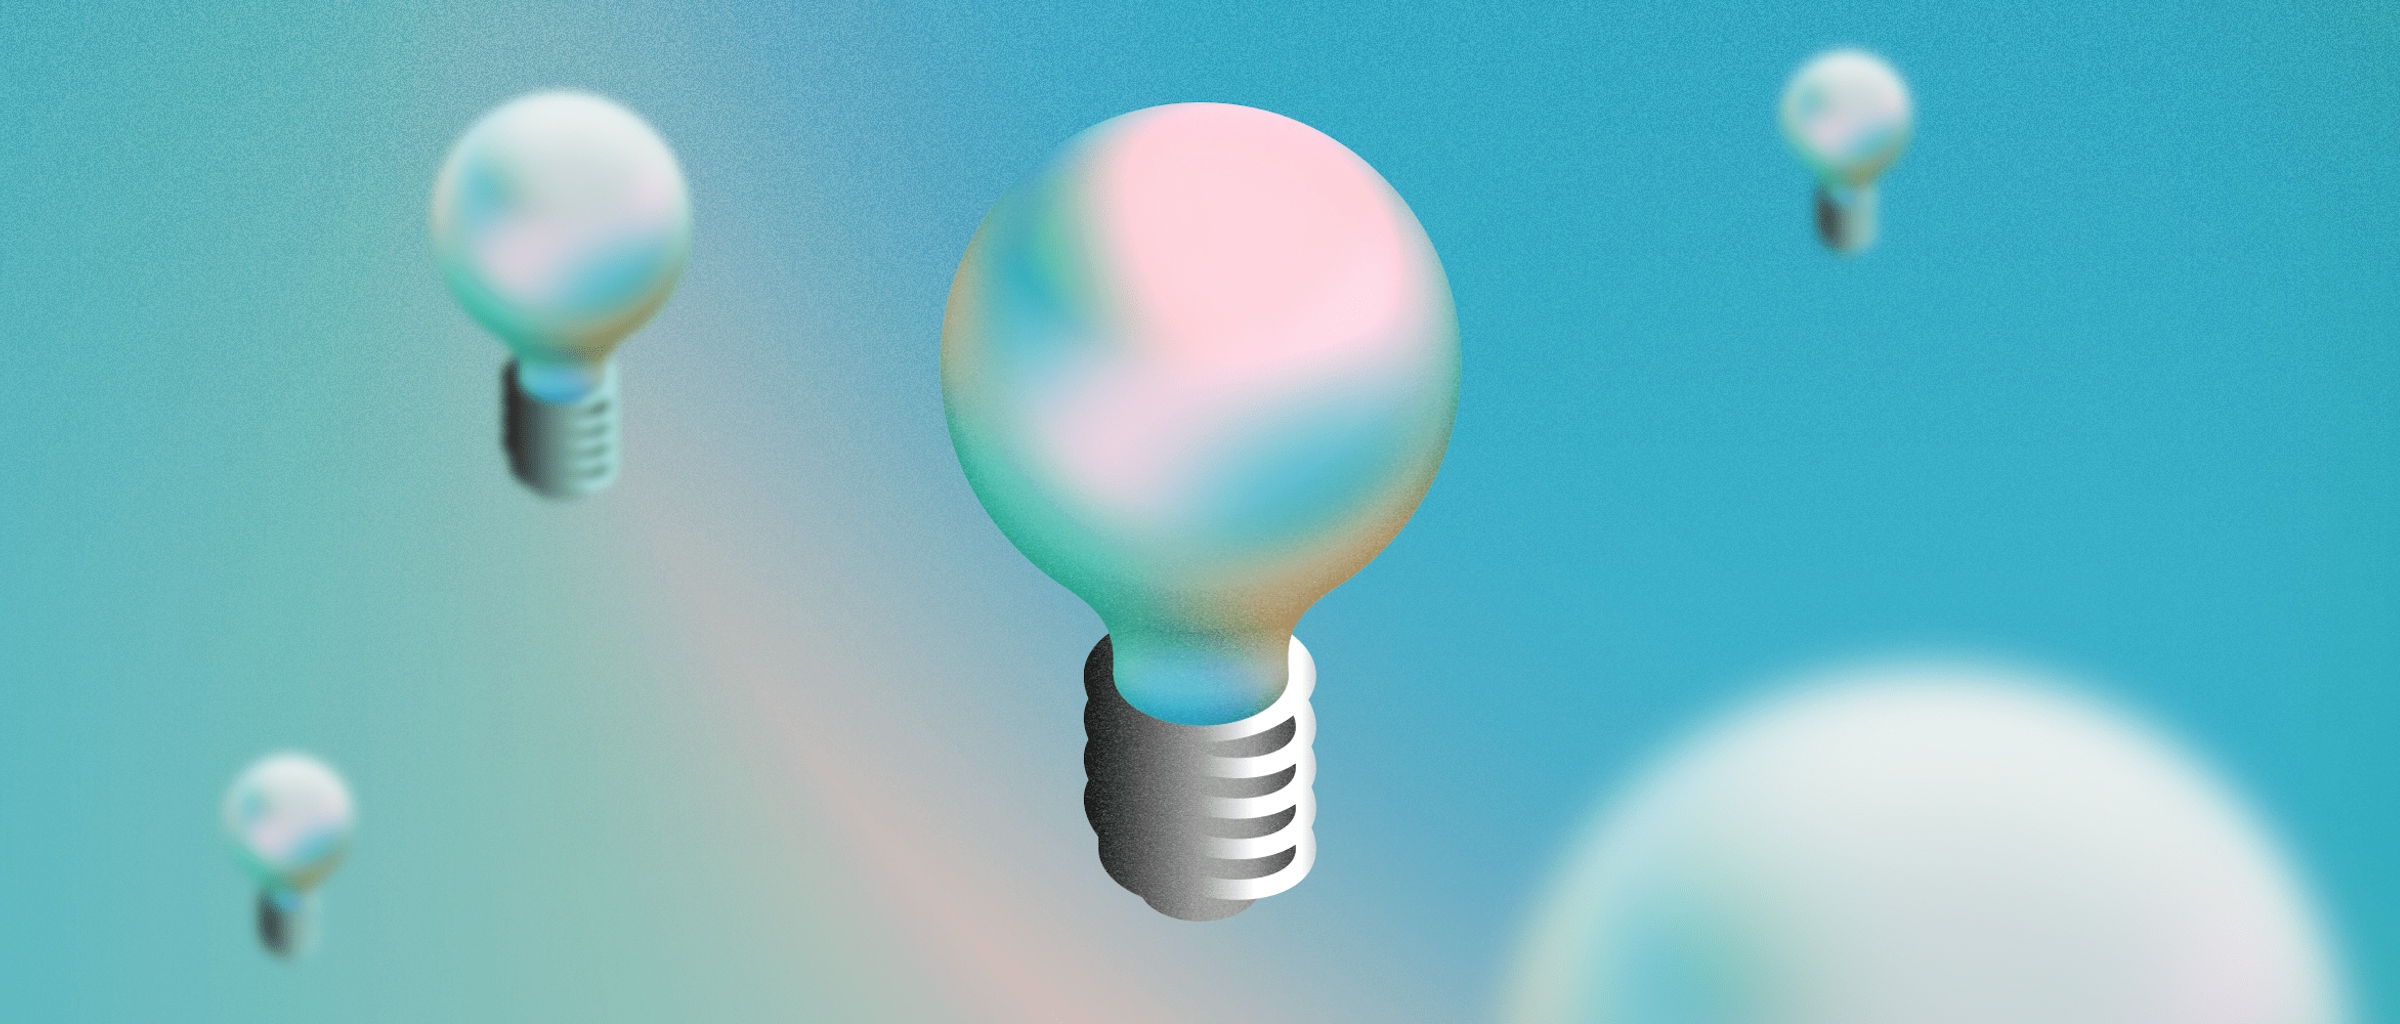 Sketch illustration of design brainstorming showing lightbulbs with a teal backdrop